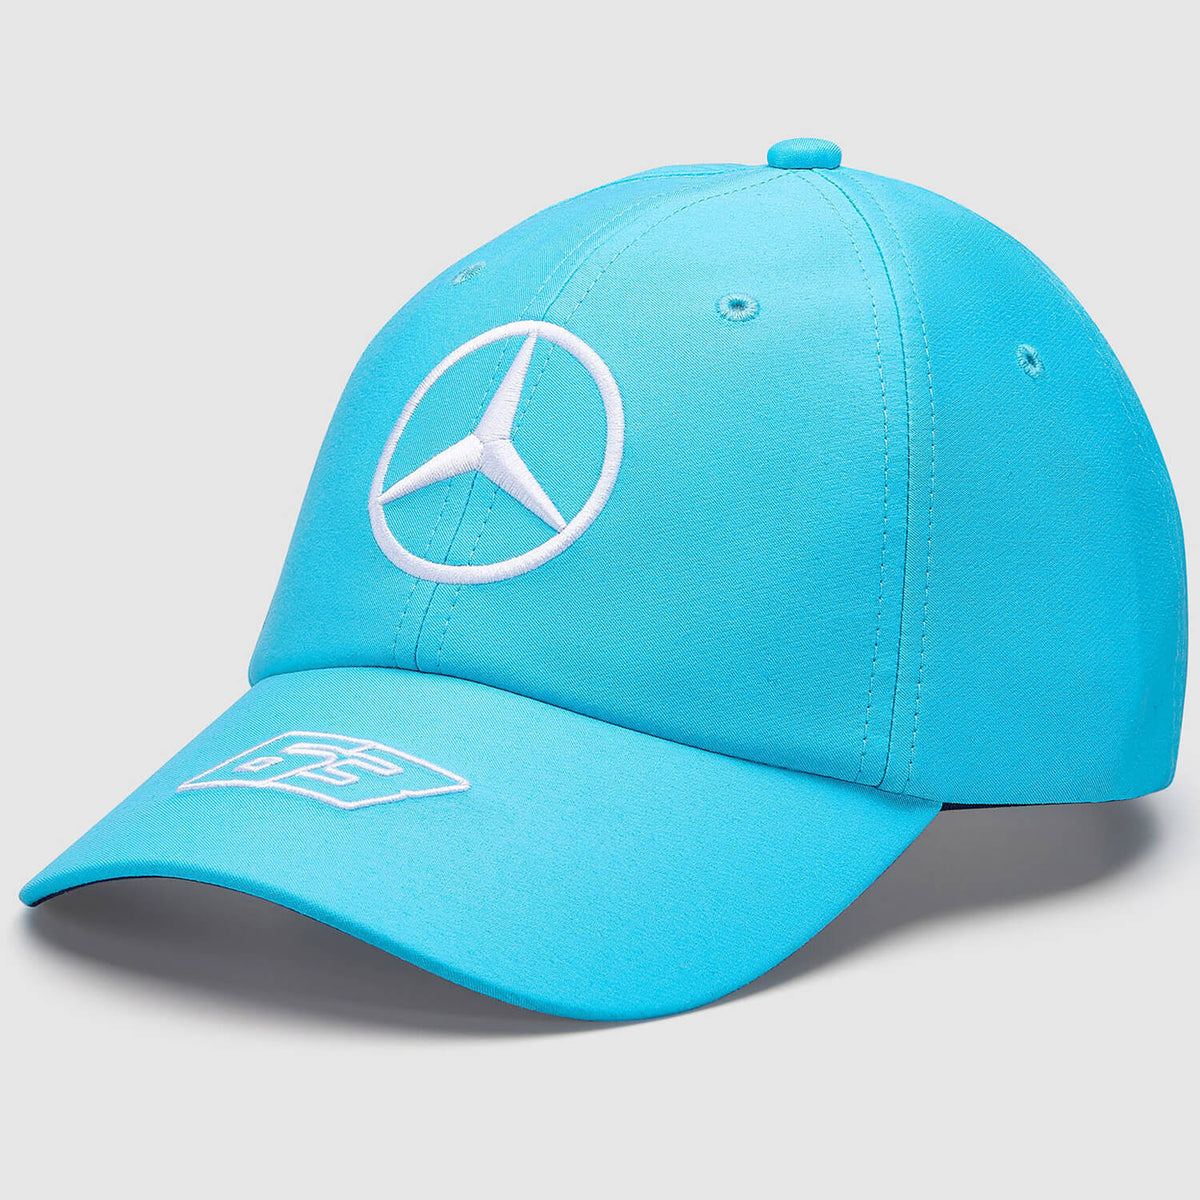 Mercedes 2023 George Russell Team Caps Blå Barn